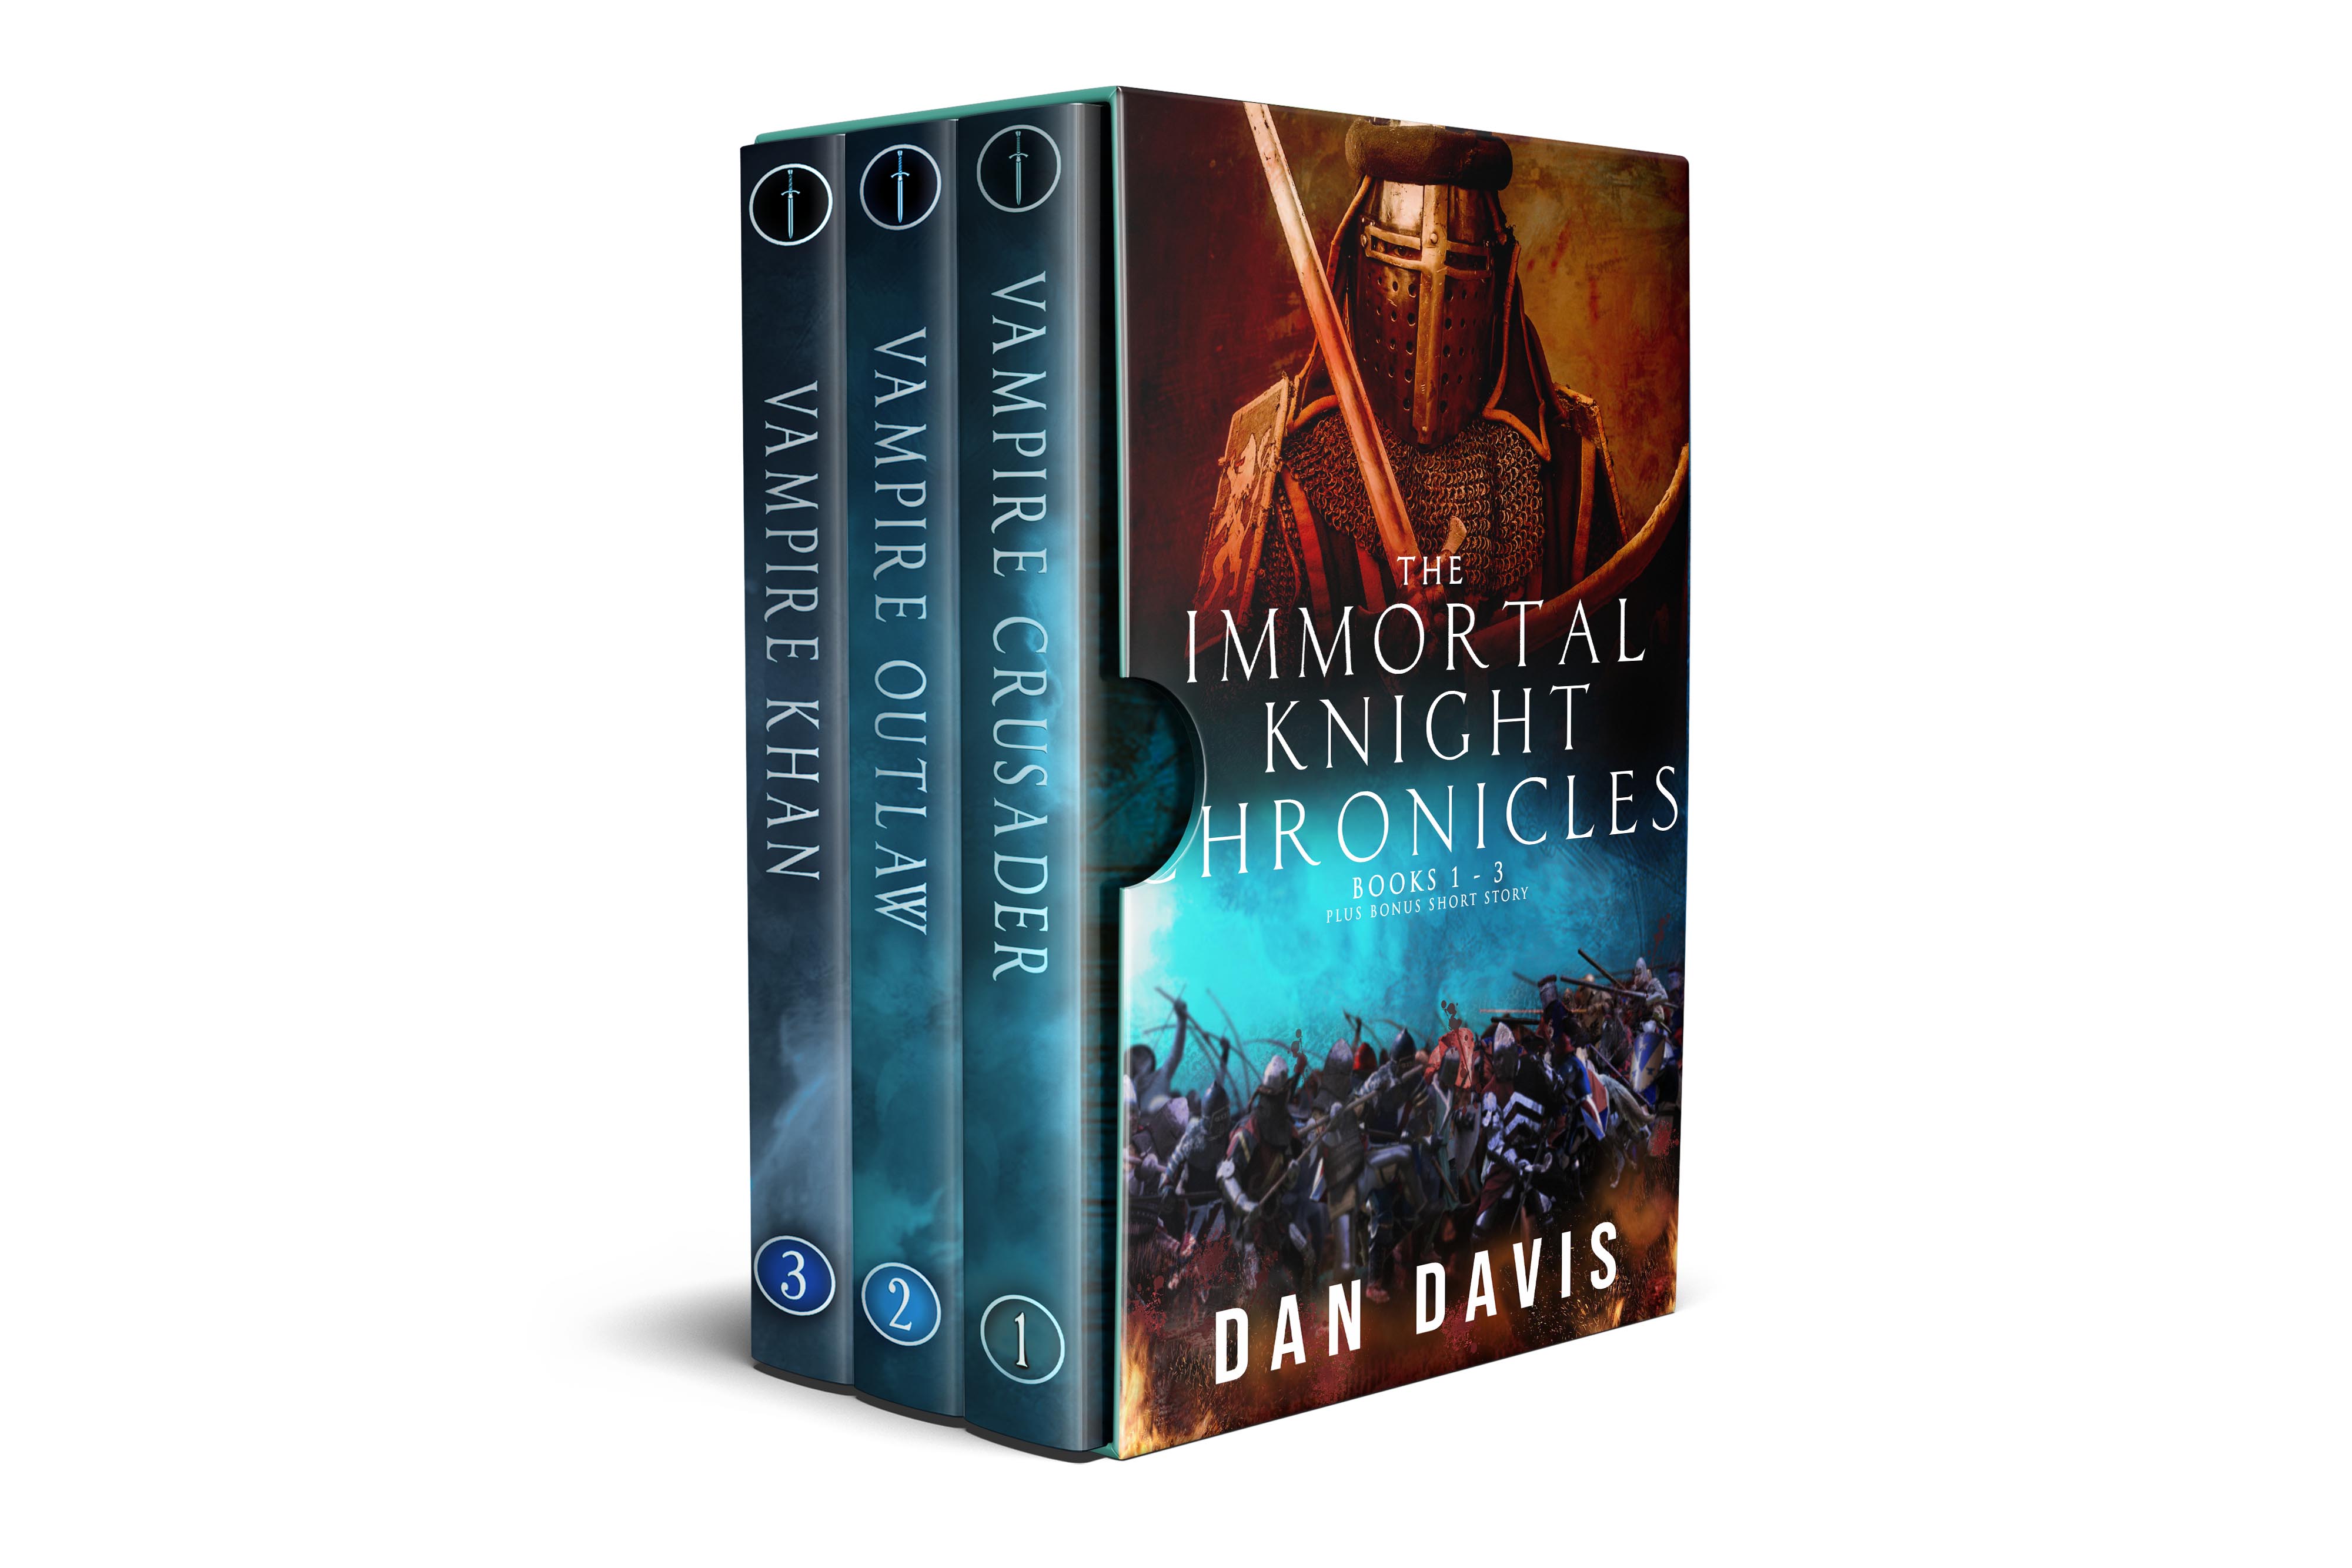 Immortal Plague: A Warriors of Light and Dark Novel (The Judas Chronicles)